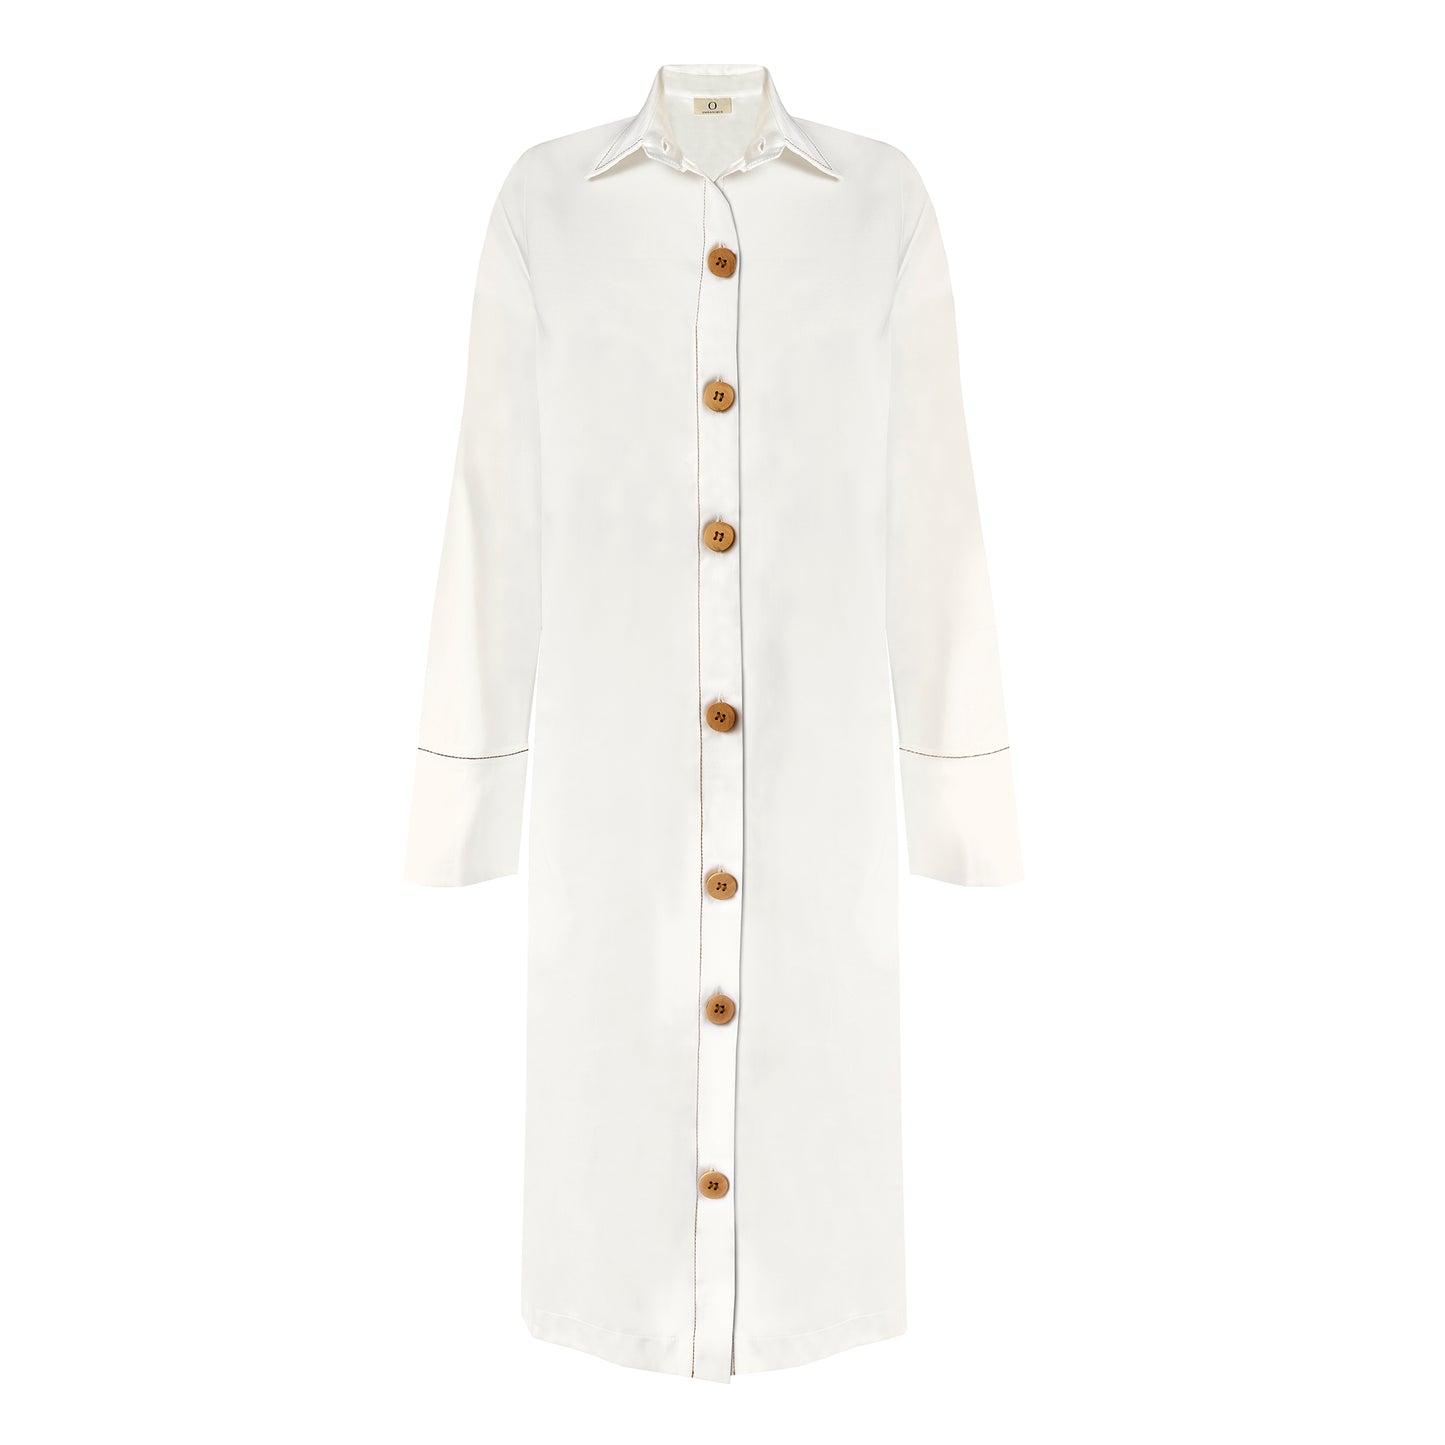 Imagen de vestido camisero blanco de algodón orgánico sobre modelo invisible realizado por Organique.